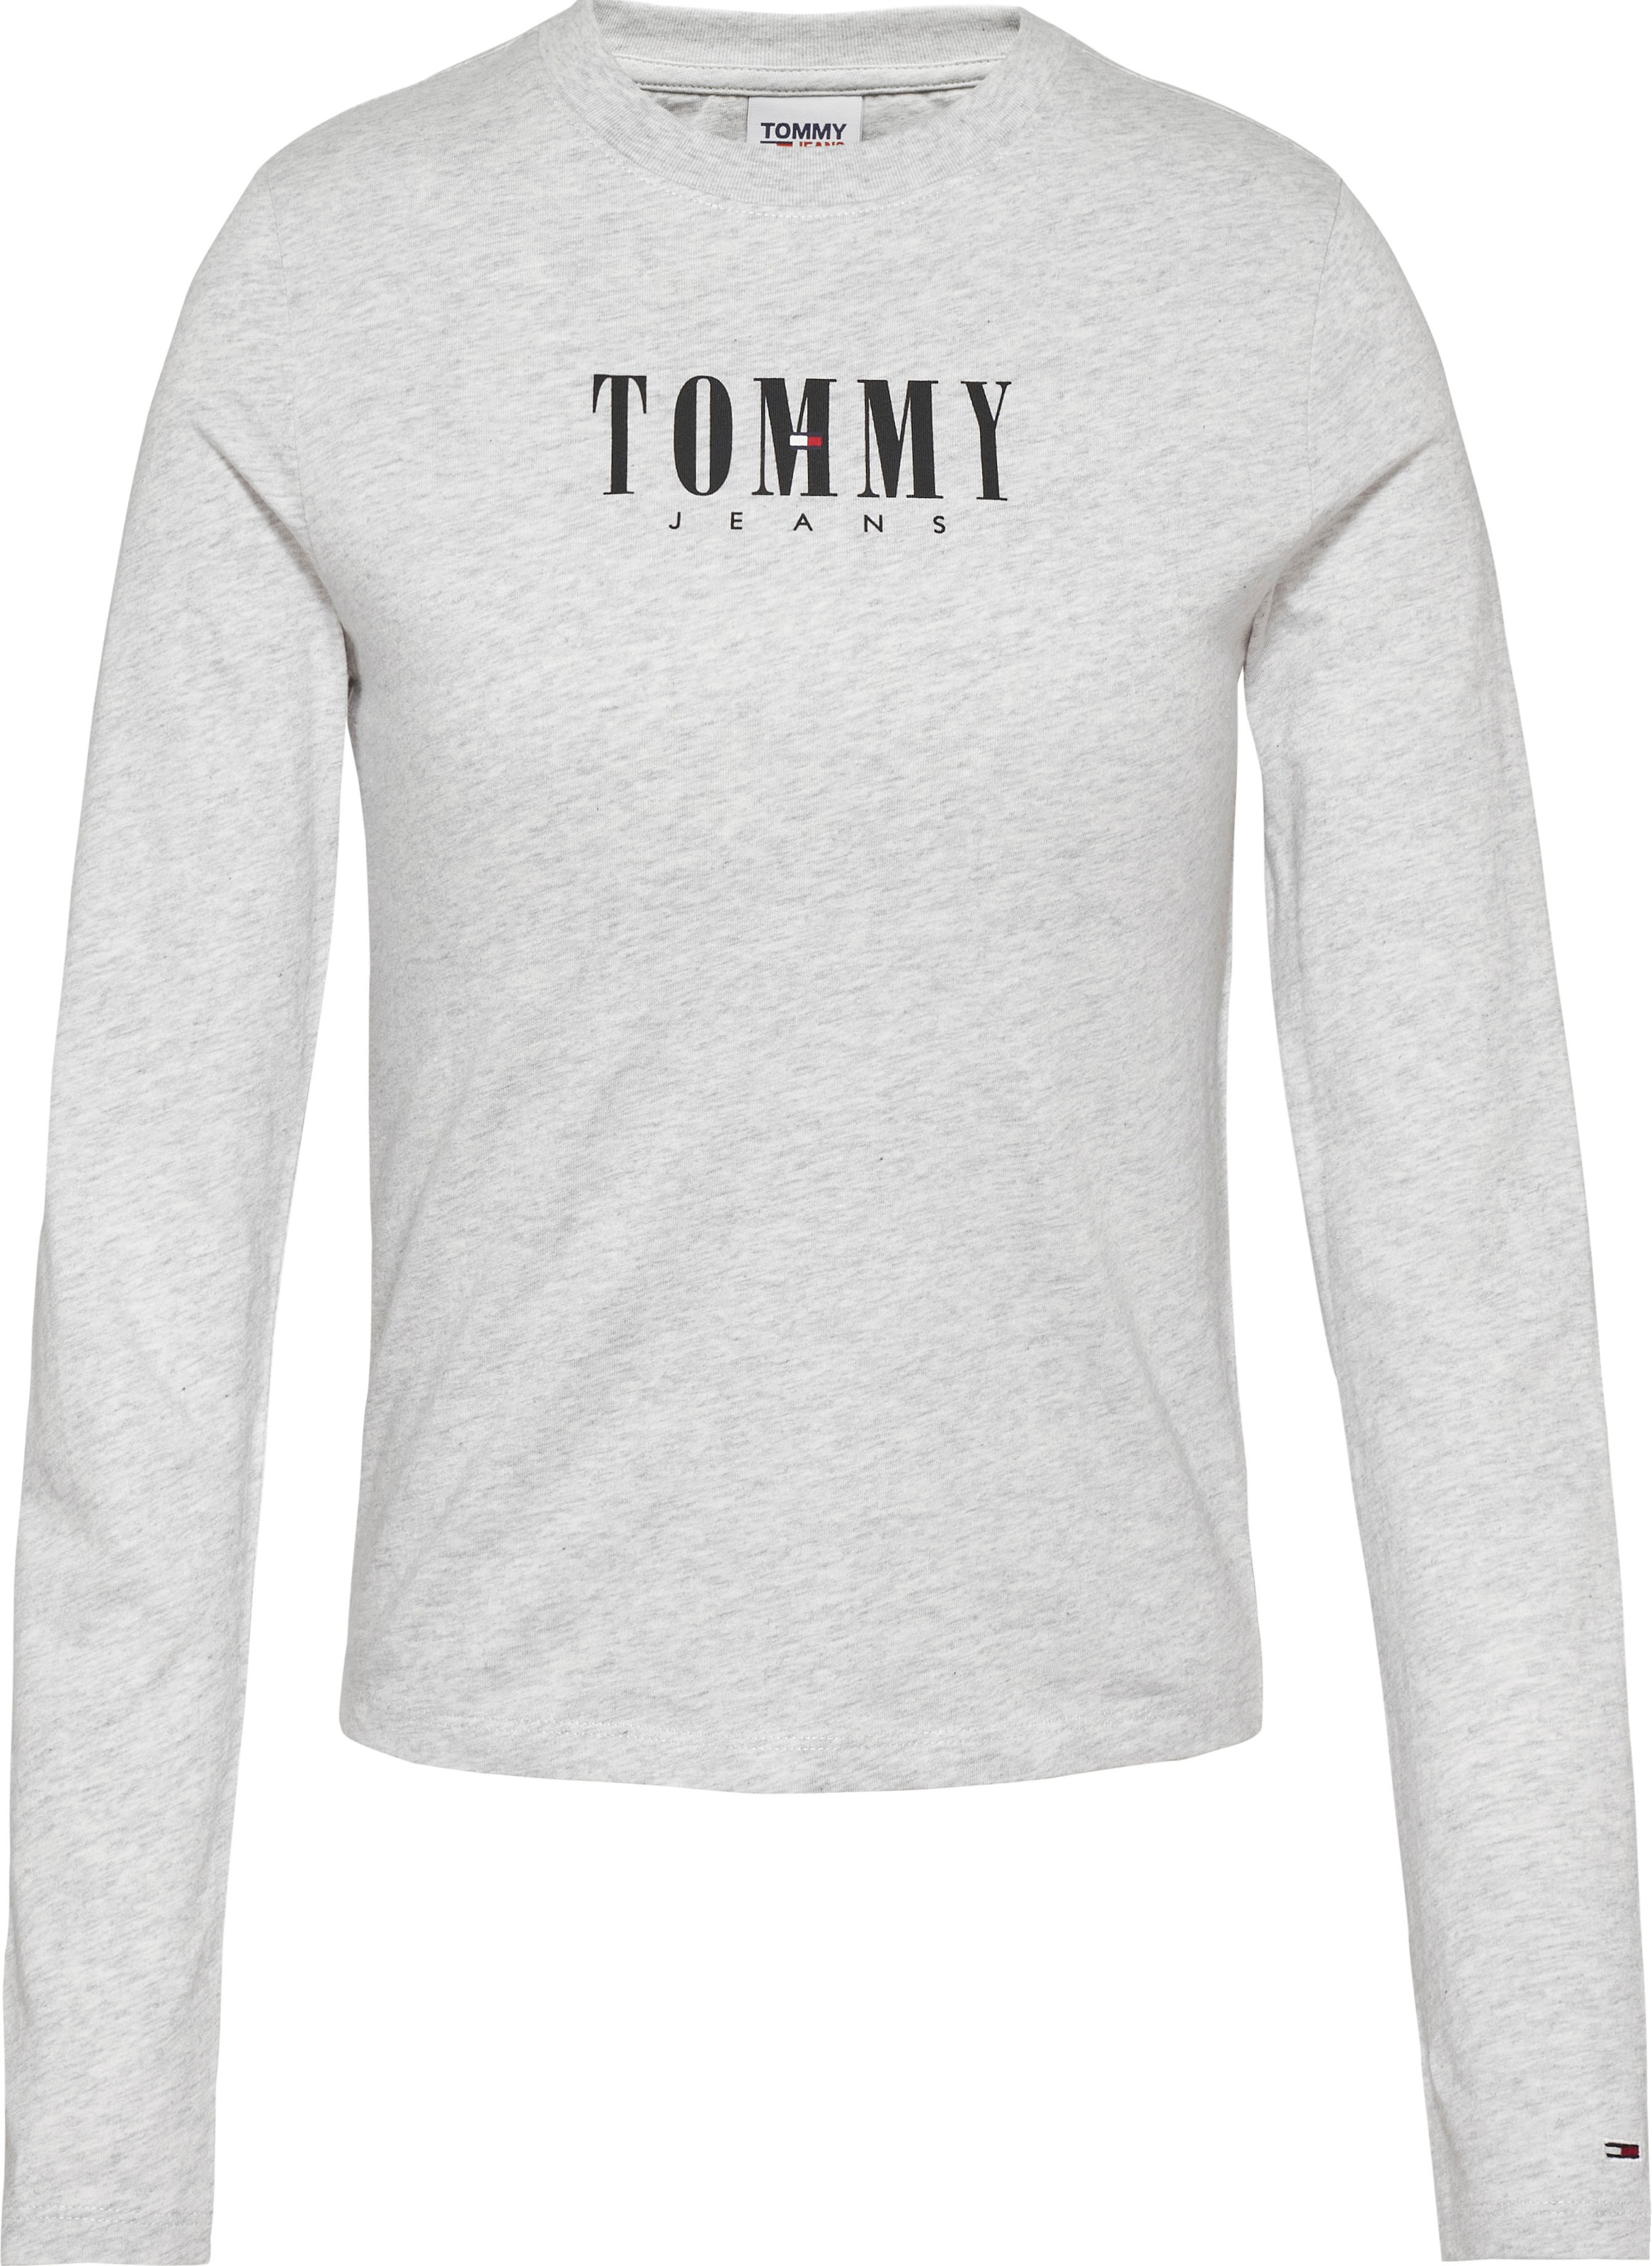 Tommy Jeans Langarmshirt »TJW Jeans 2 Logo-Flag kaufen Tommy BABY | BAUR LS«, ESSENTIAL LOGO mit